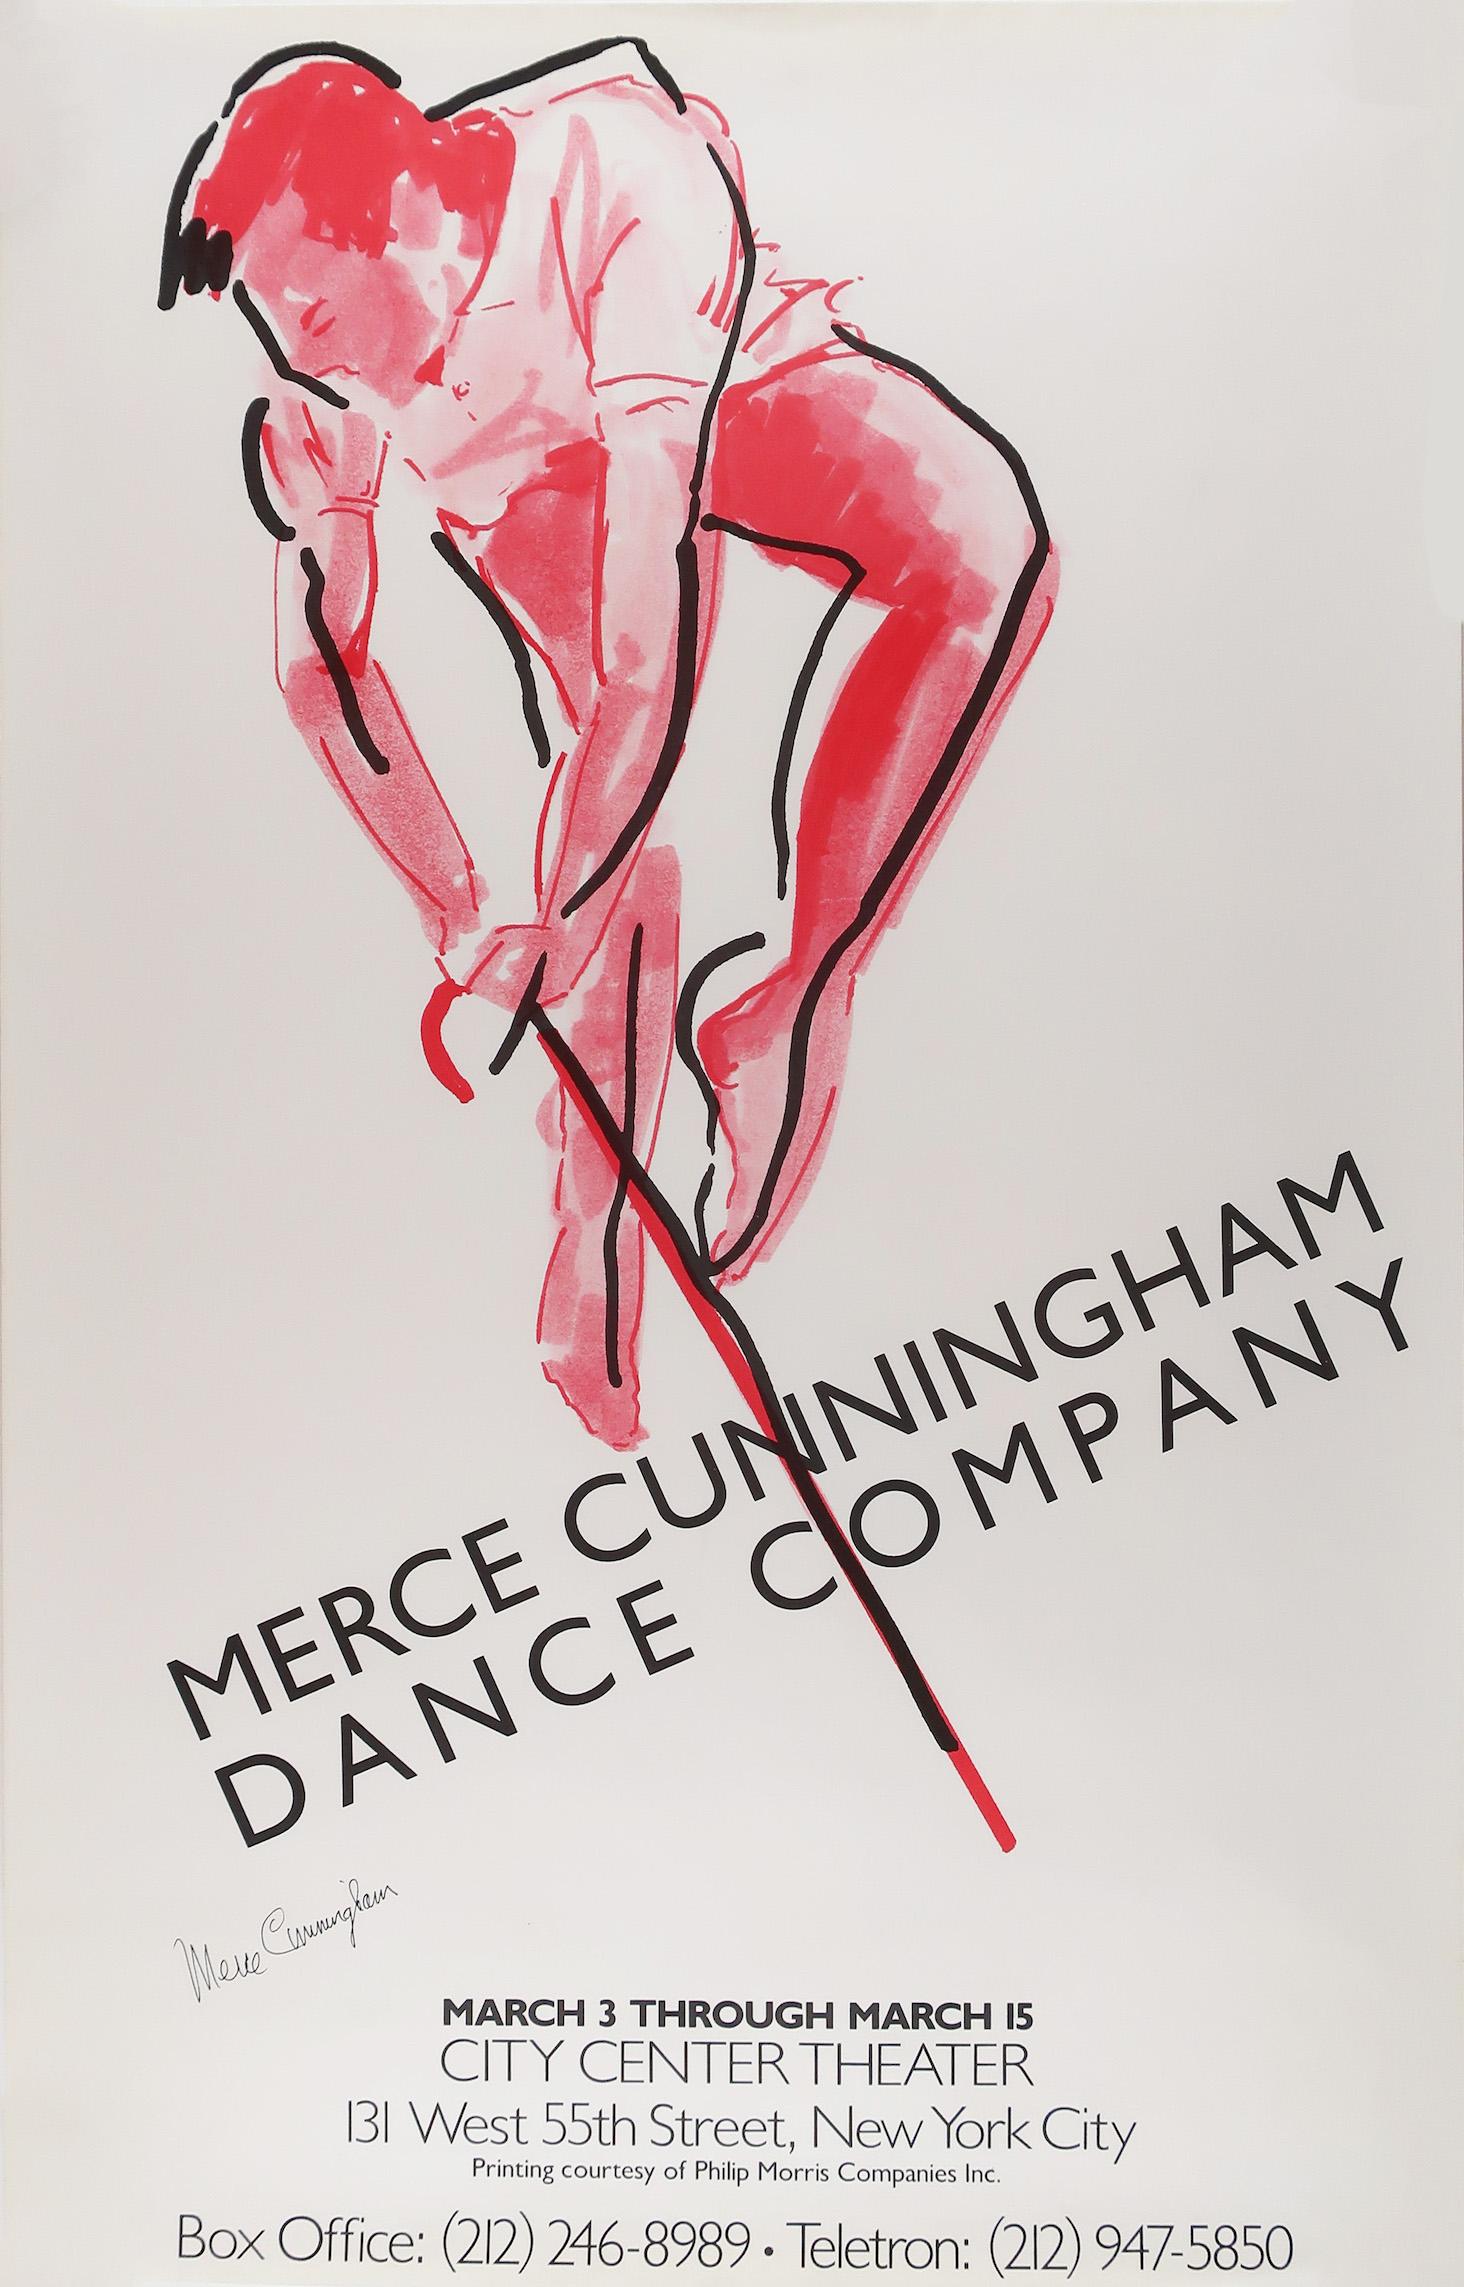 Compagnie de danse Merce Cunningham
"Merce Cunningham Dance Company"
City Center, New York, 1987
Poster
35 1/2 x 23 pouces
Signé par Merce Cunningham